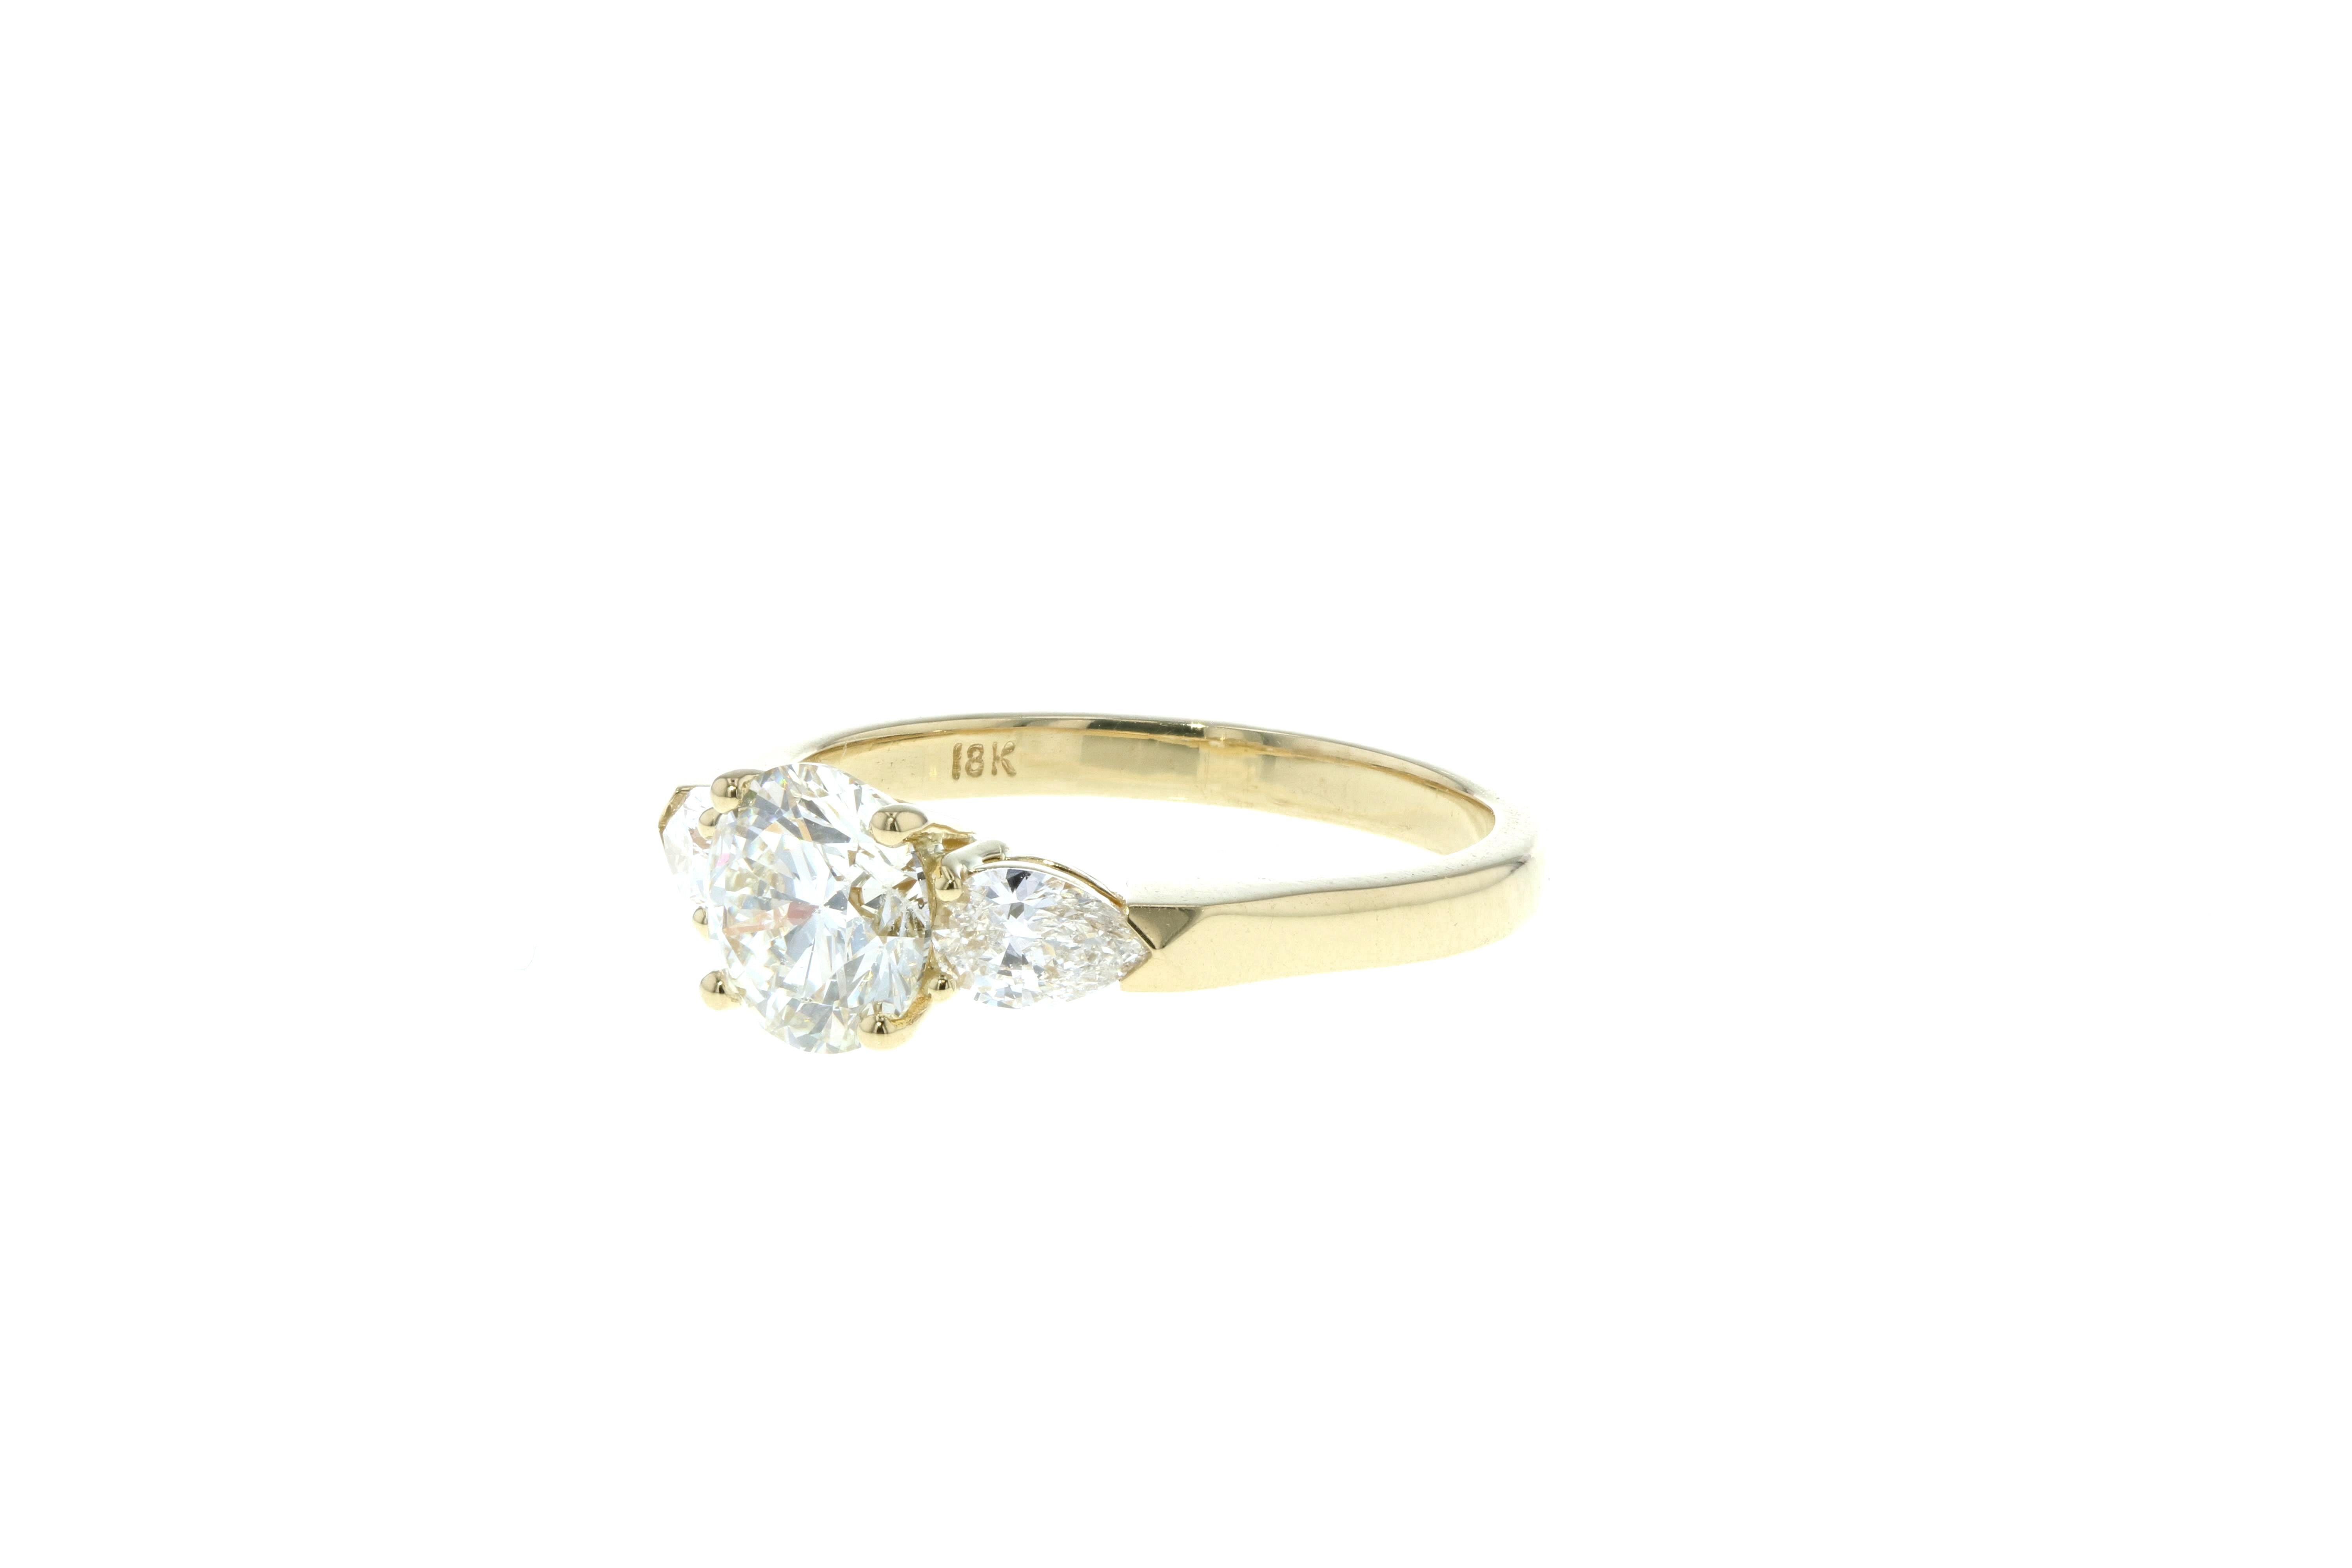 3 diamond engagement ring yellow gold